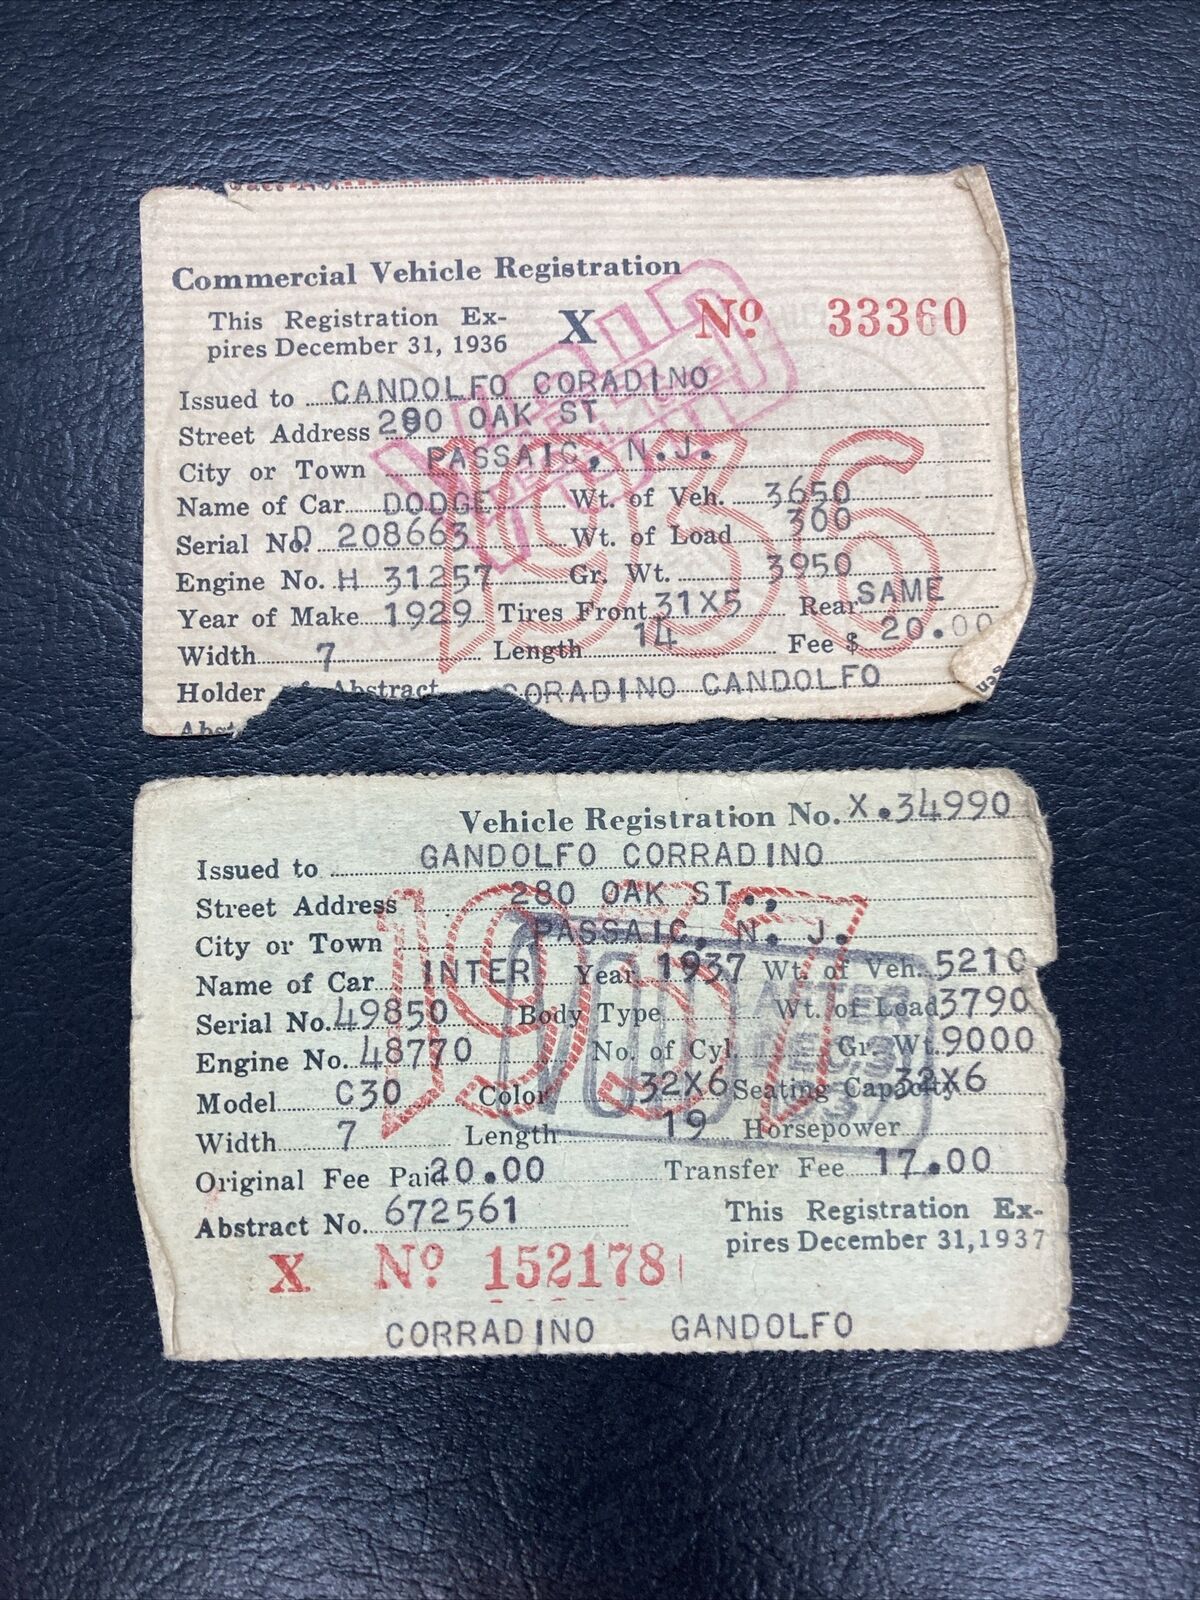 1936-37 Vehicle Registration And Commercial Vehicle Registration / Joe Corradino